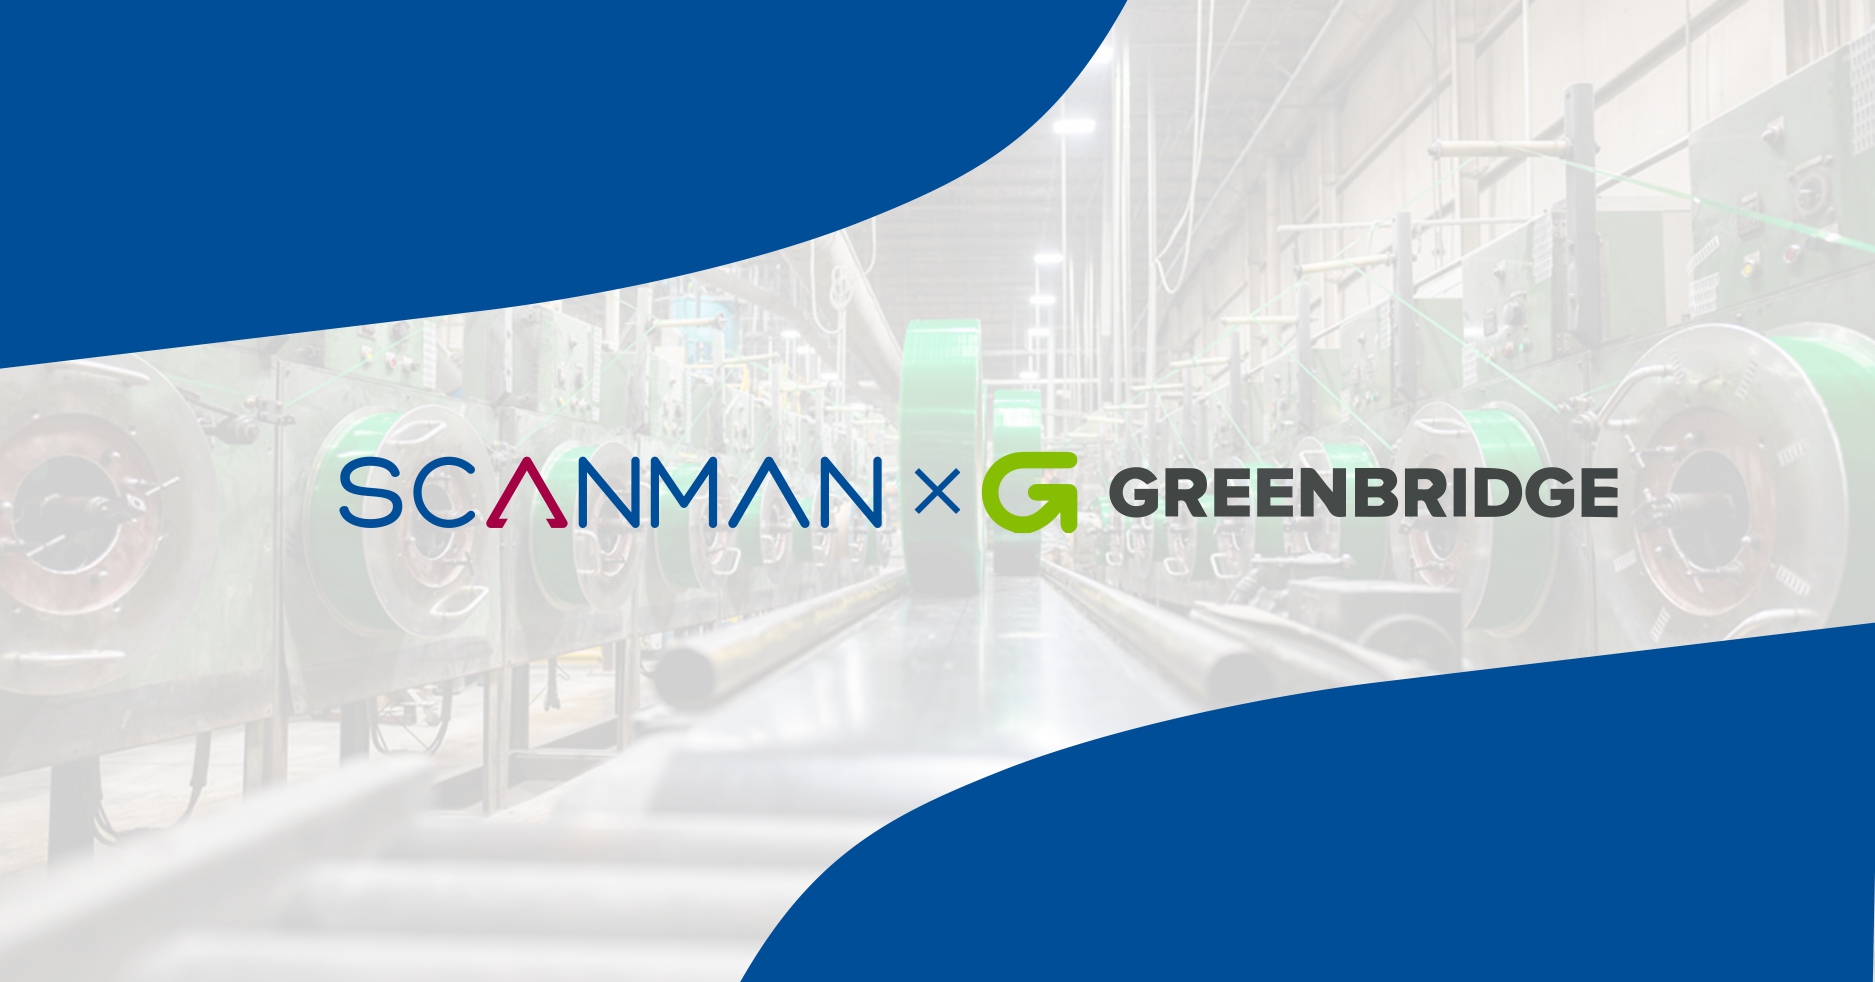 Logo of Scanman next to the logo of Greenbridge